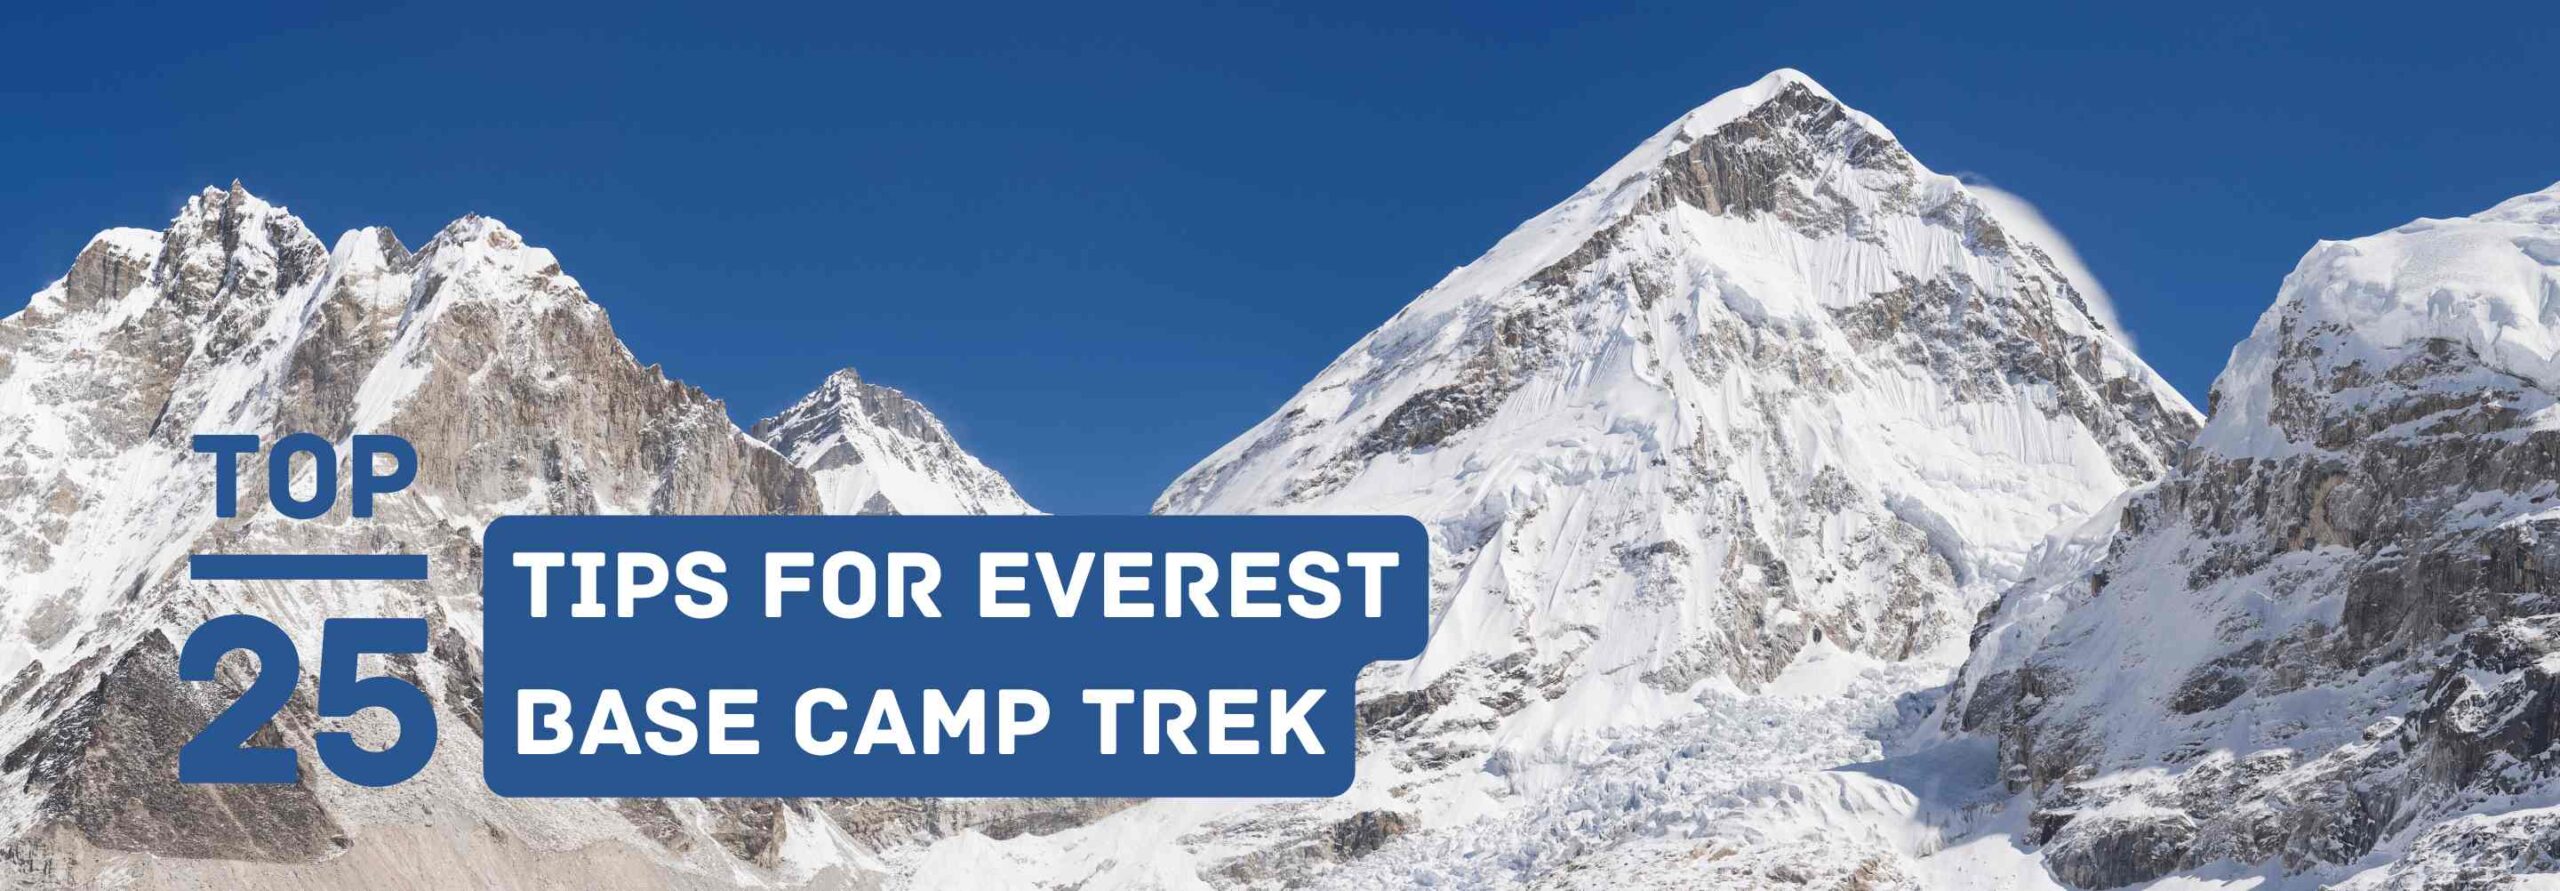 25 Must-Know Tips for Everest Base Camp Trek